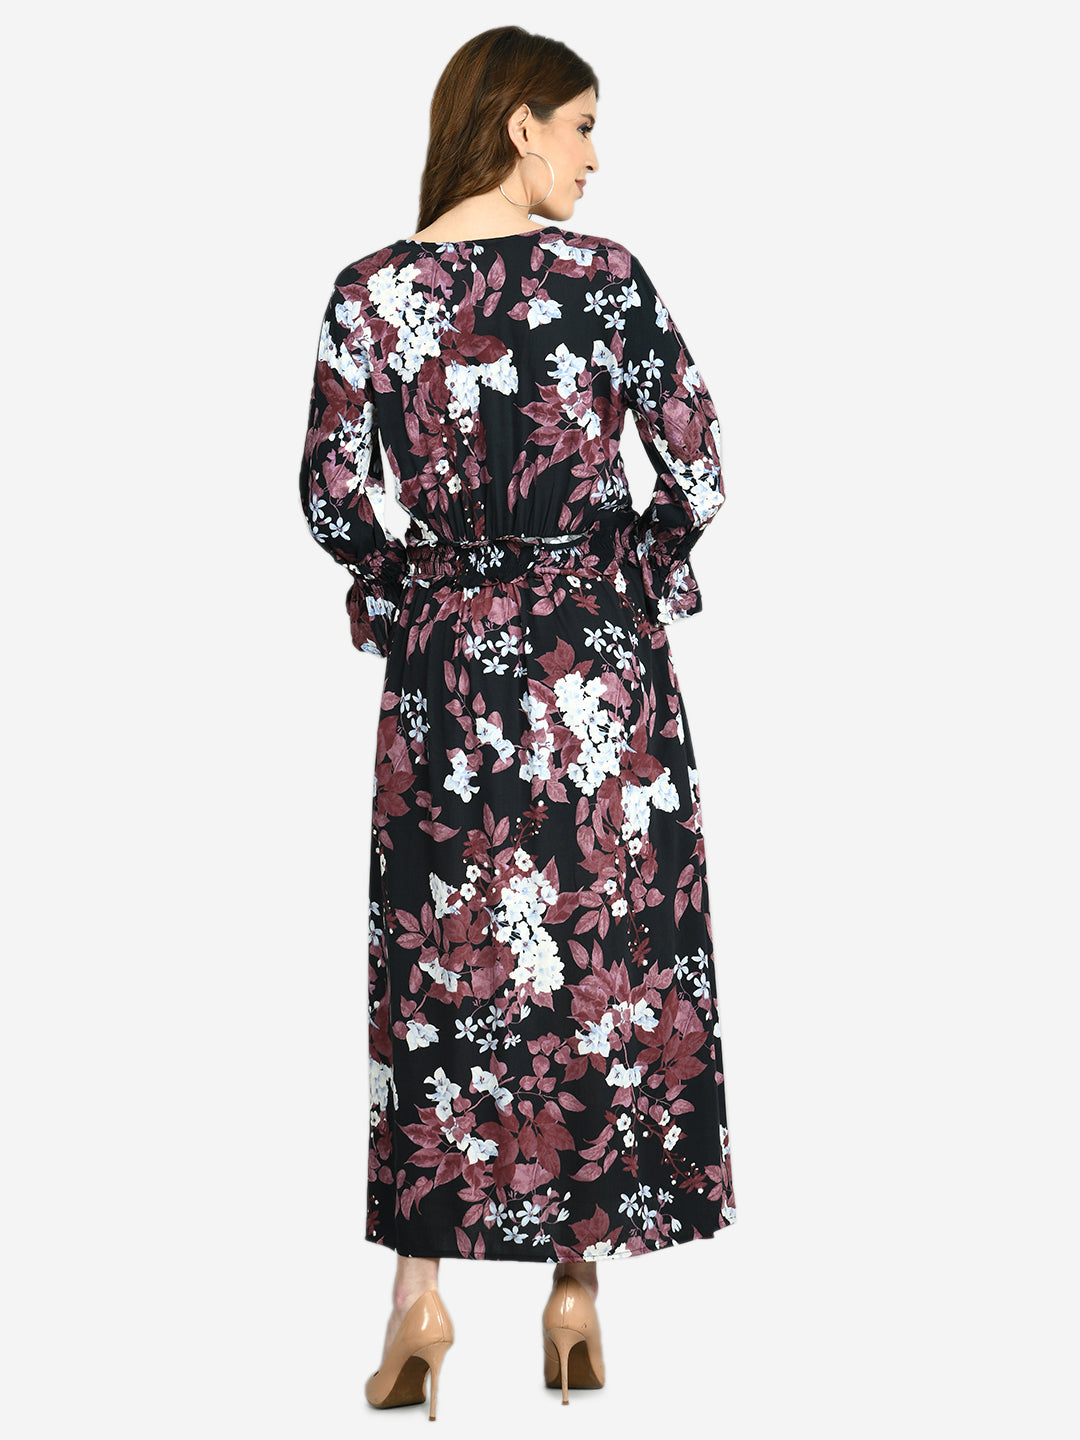 Myshka Women's Multi Rayon Printed Full Sleeve V Neck Casual Dress